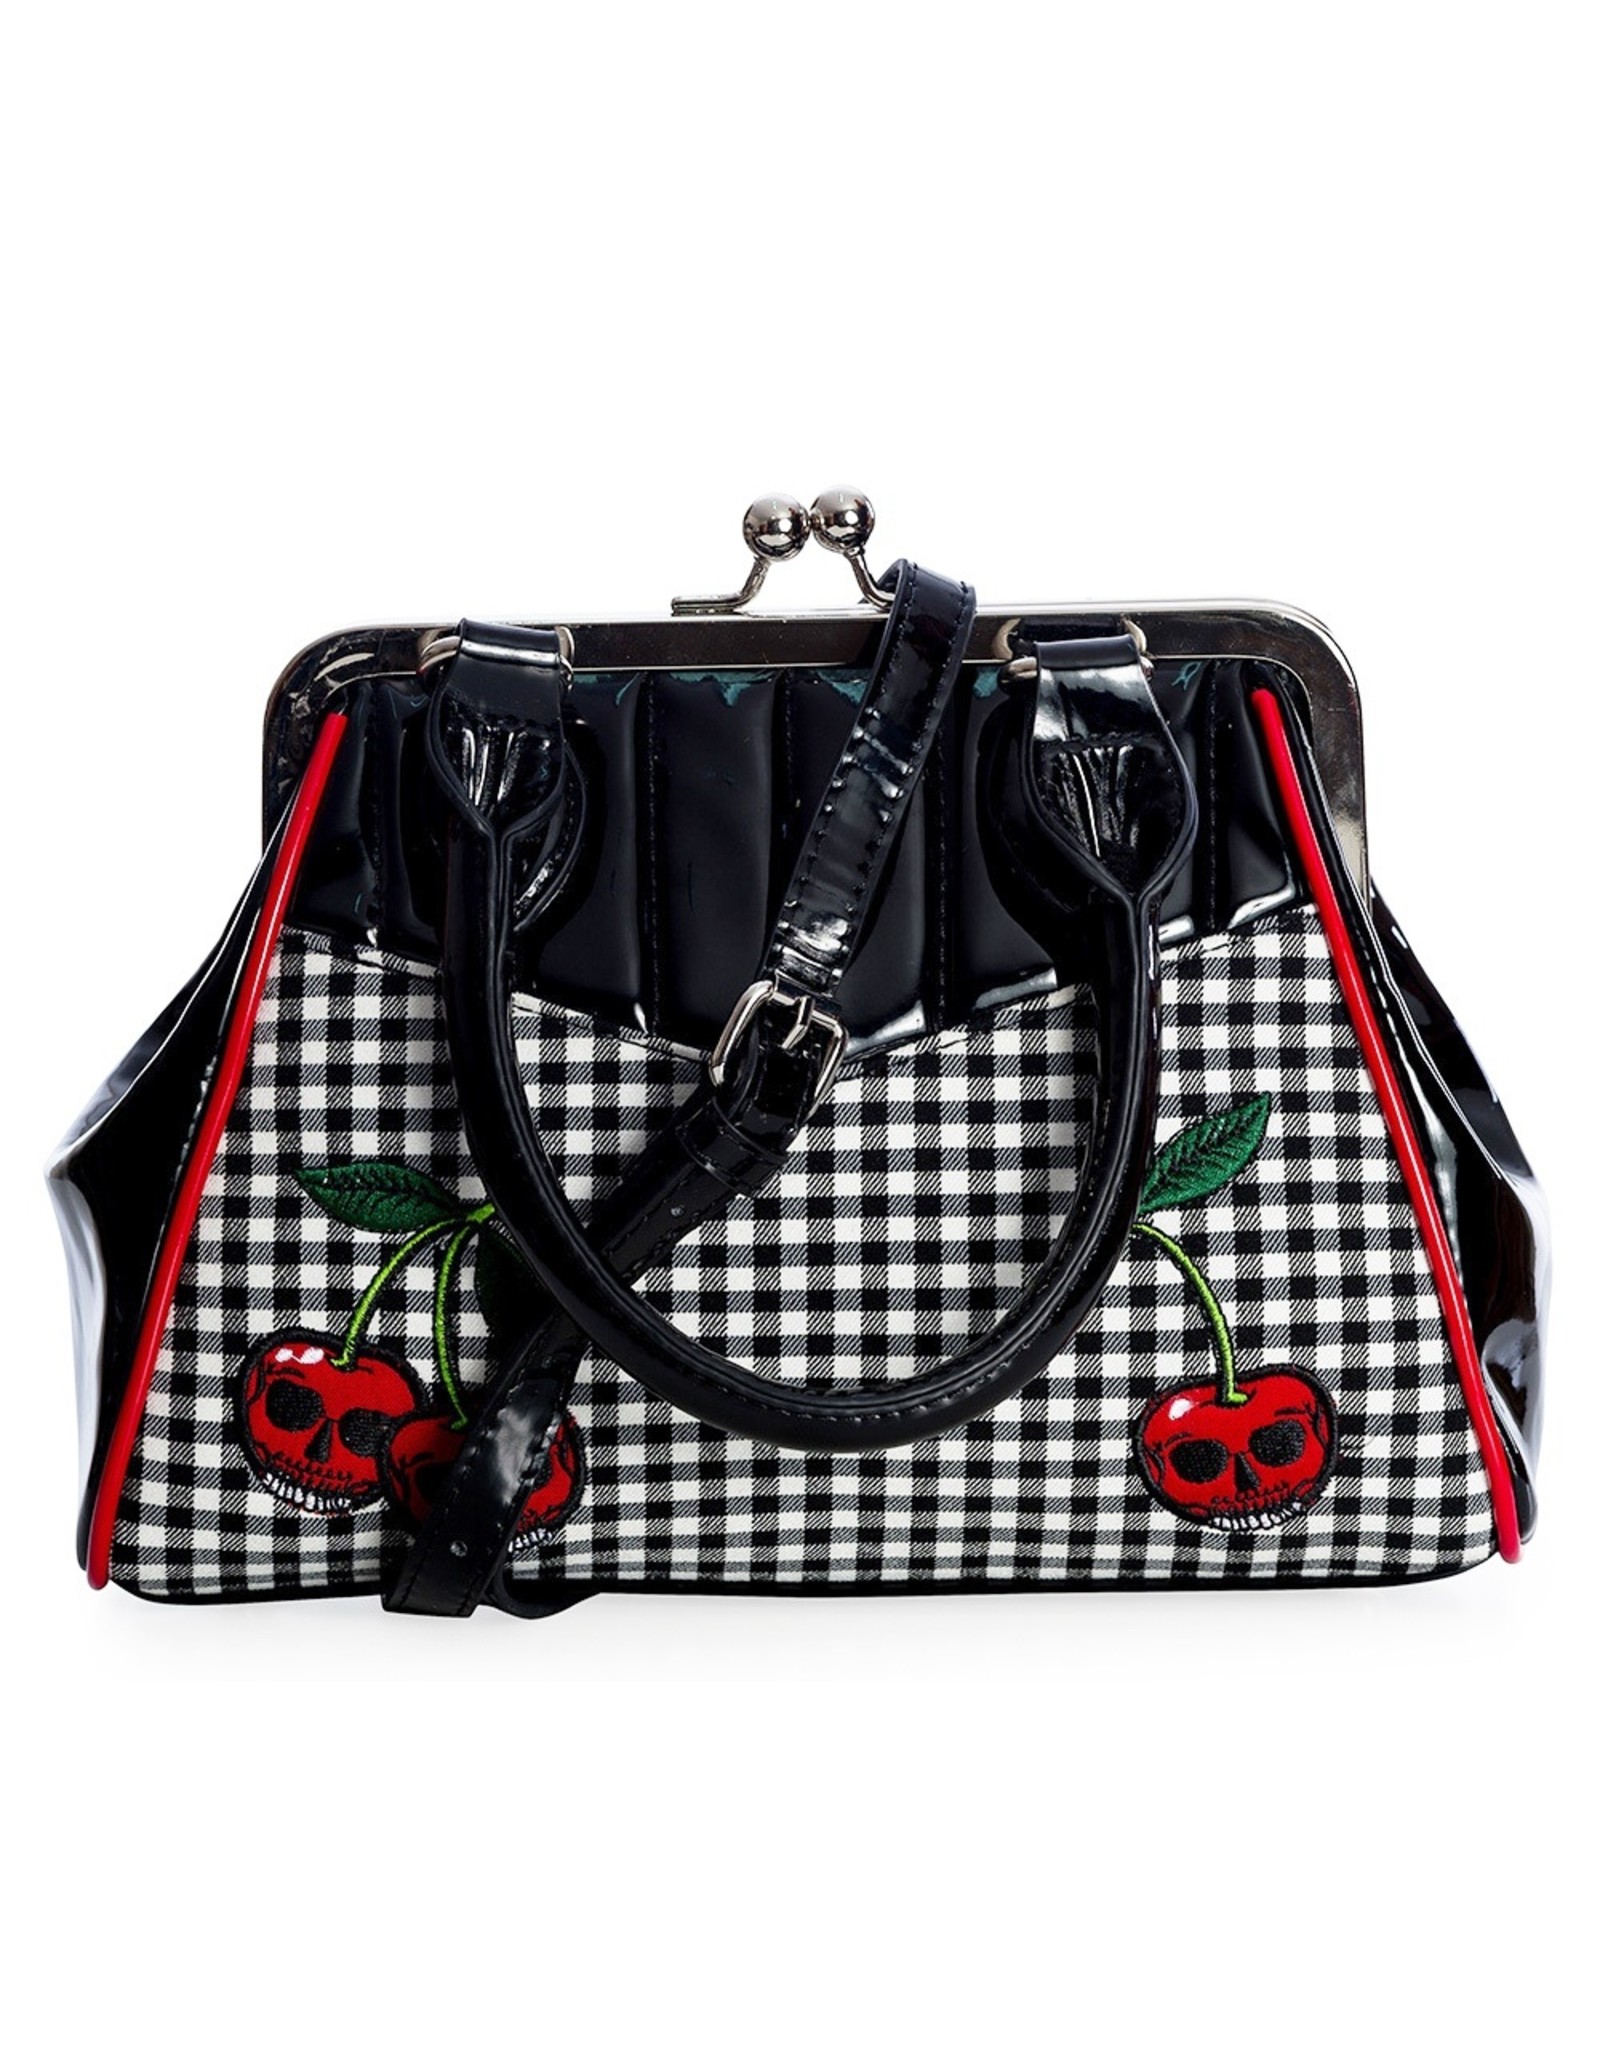 Banned Retro bags  Vintage bags - Rockabilly Cherry Handbag